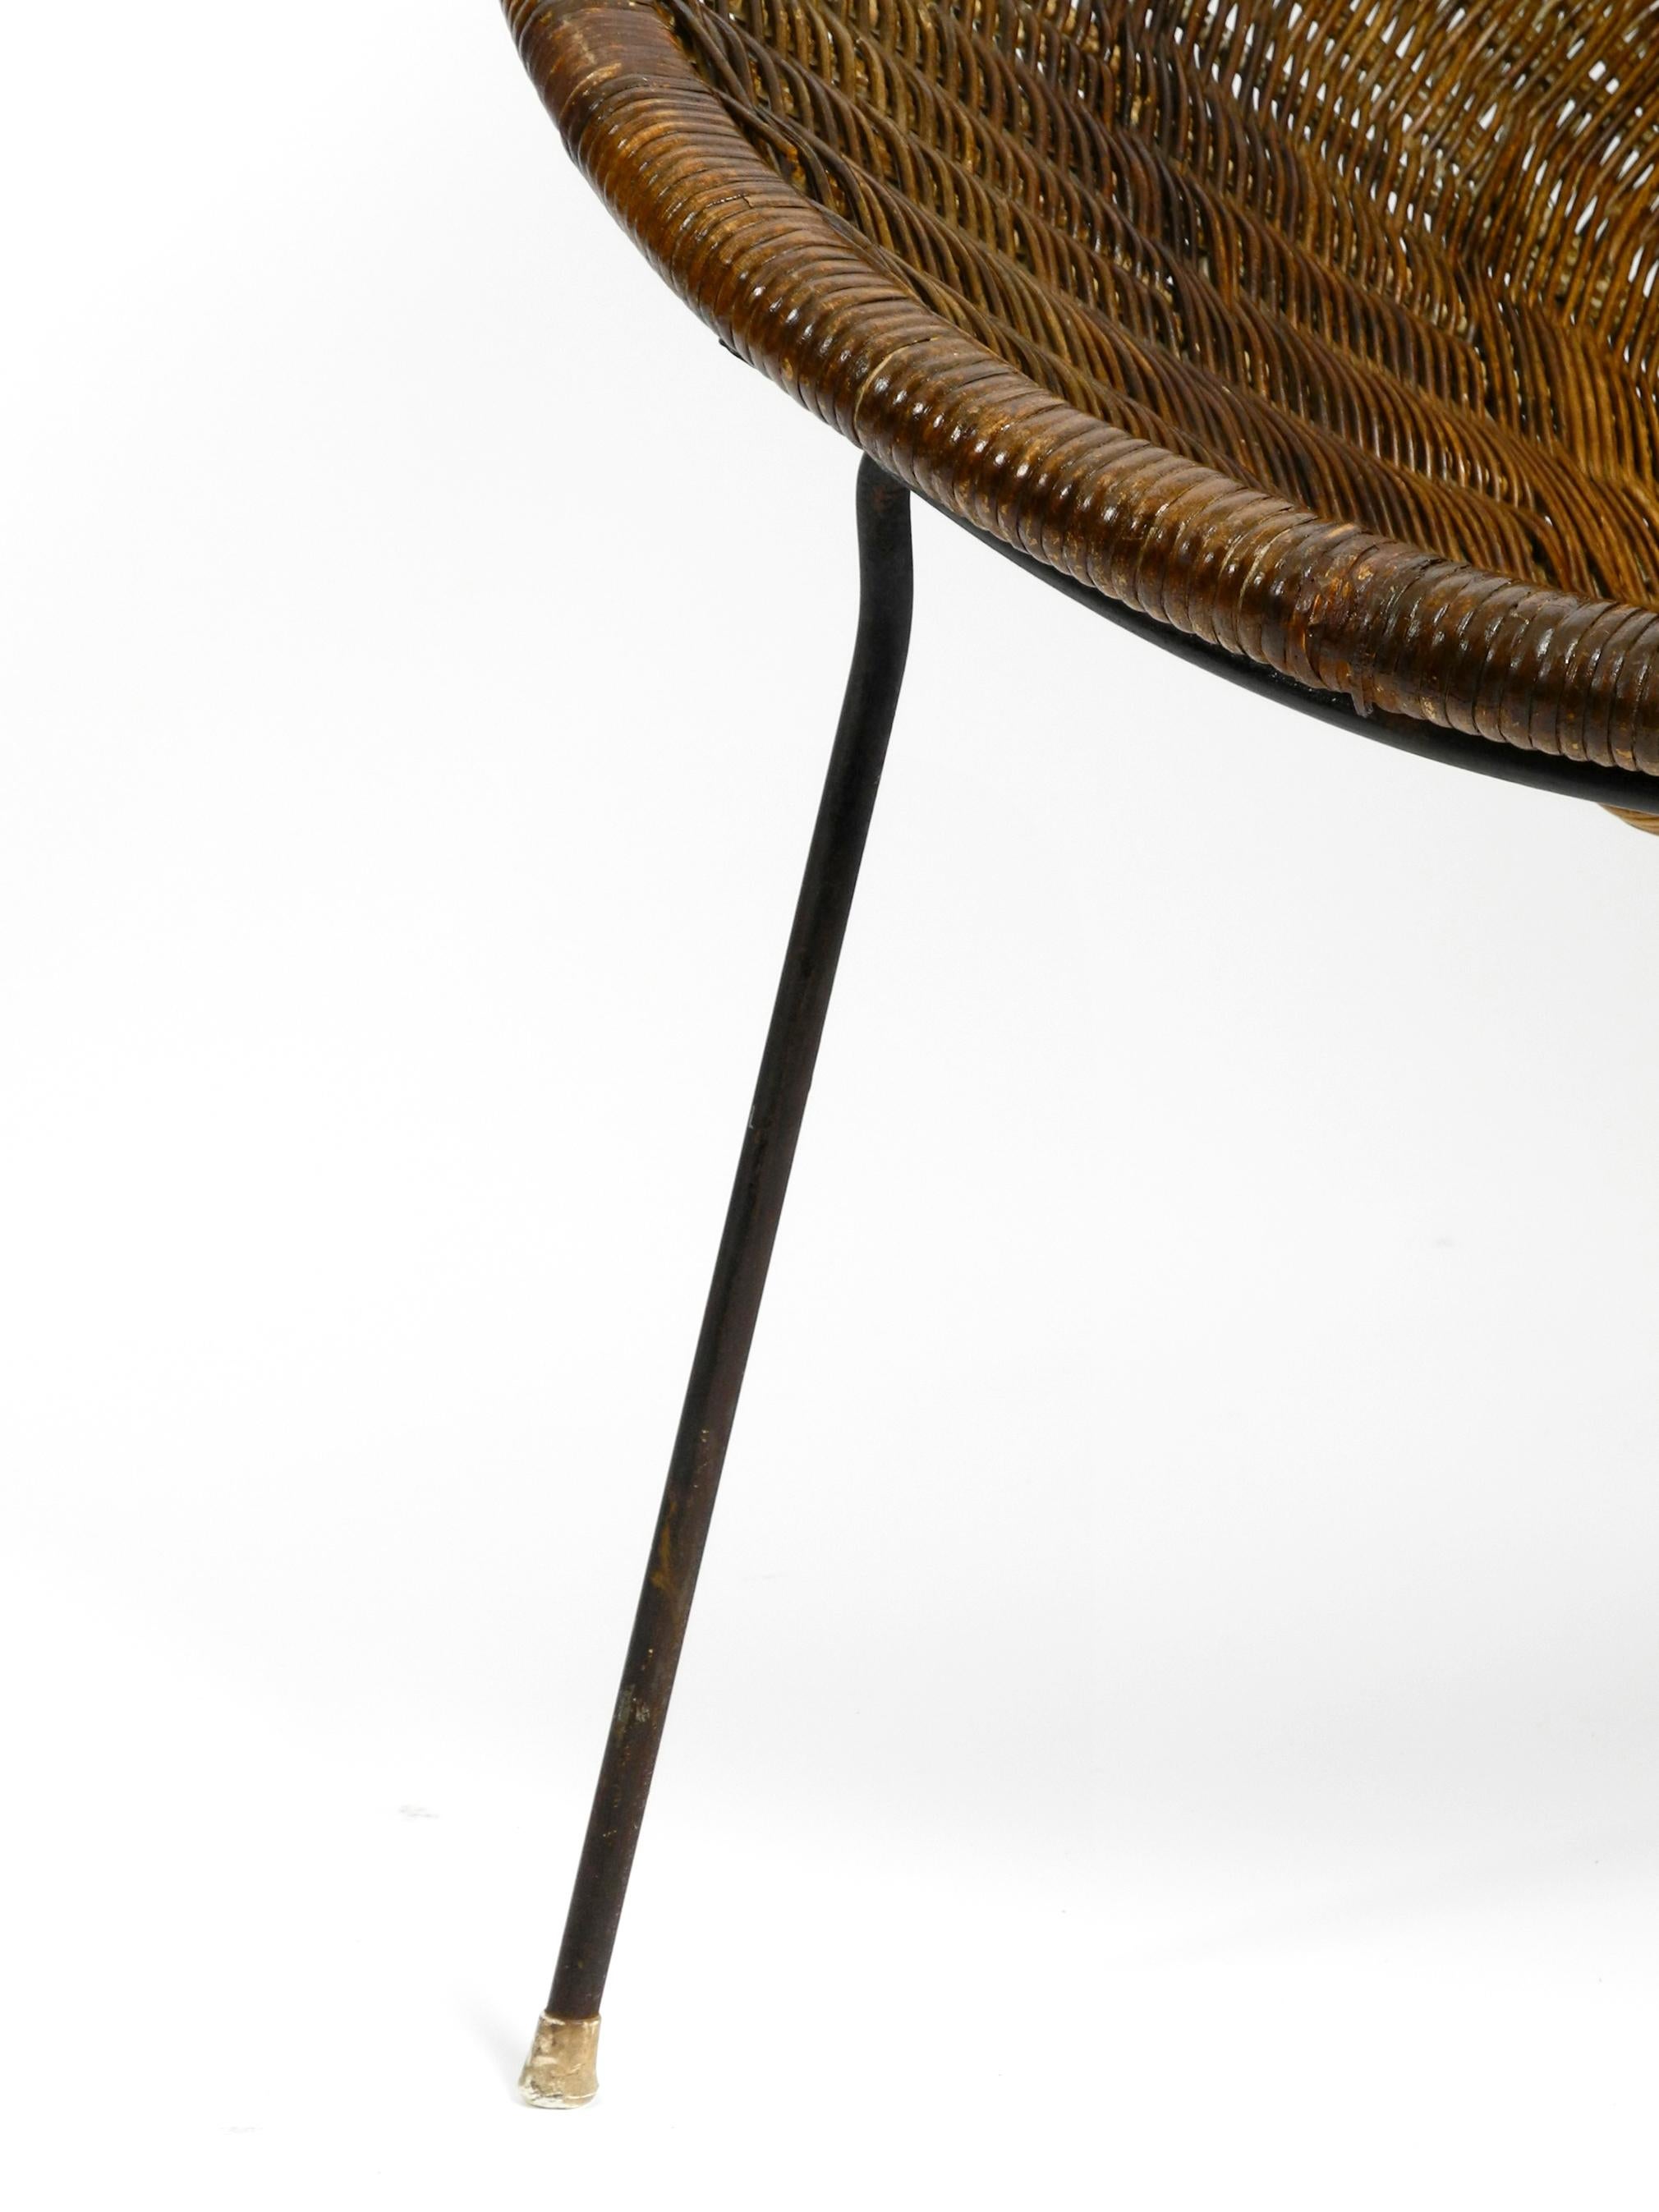 Italian Tripod Mid Century Lounge Basket Chair Made of Wicker by Roberto Mango 14